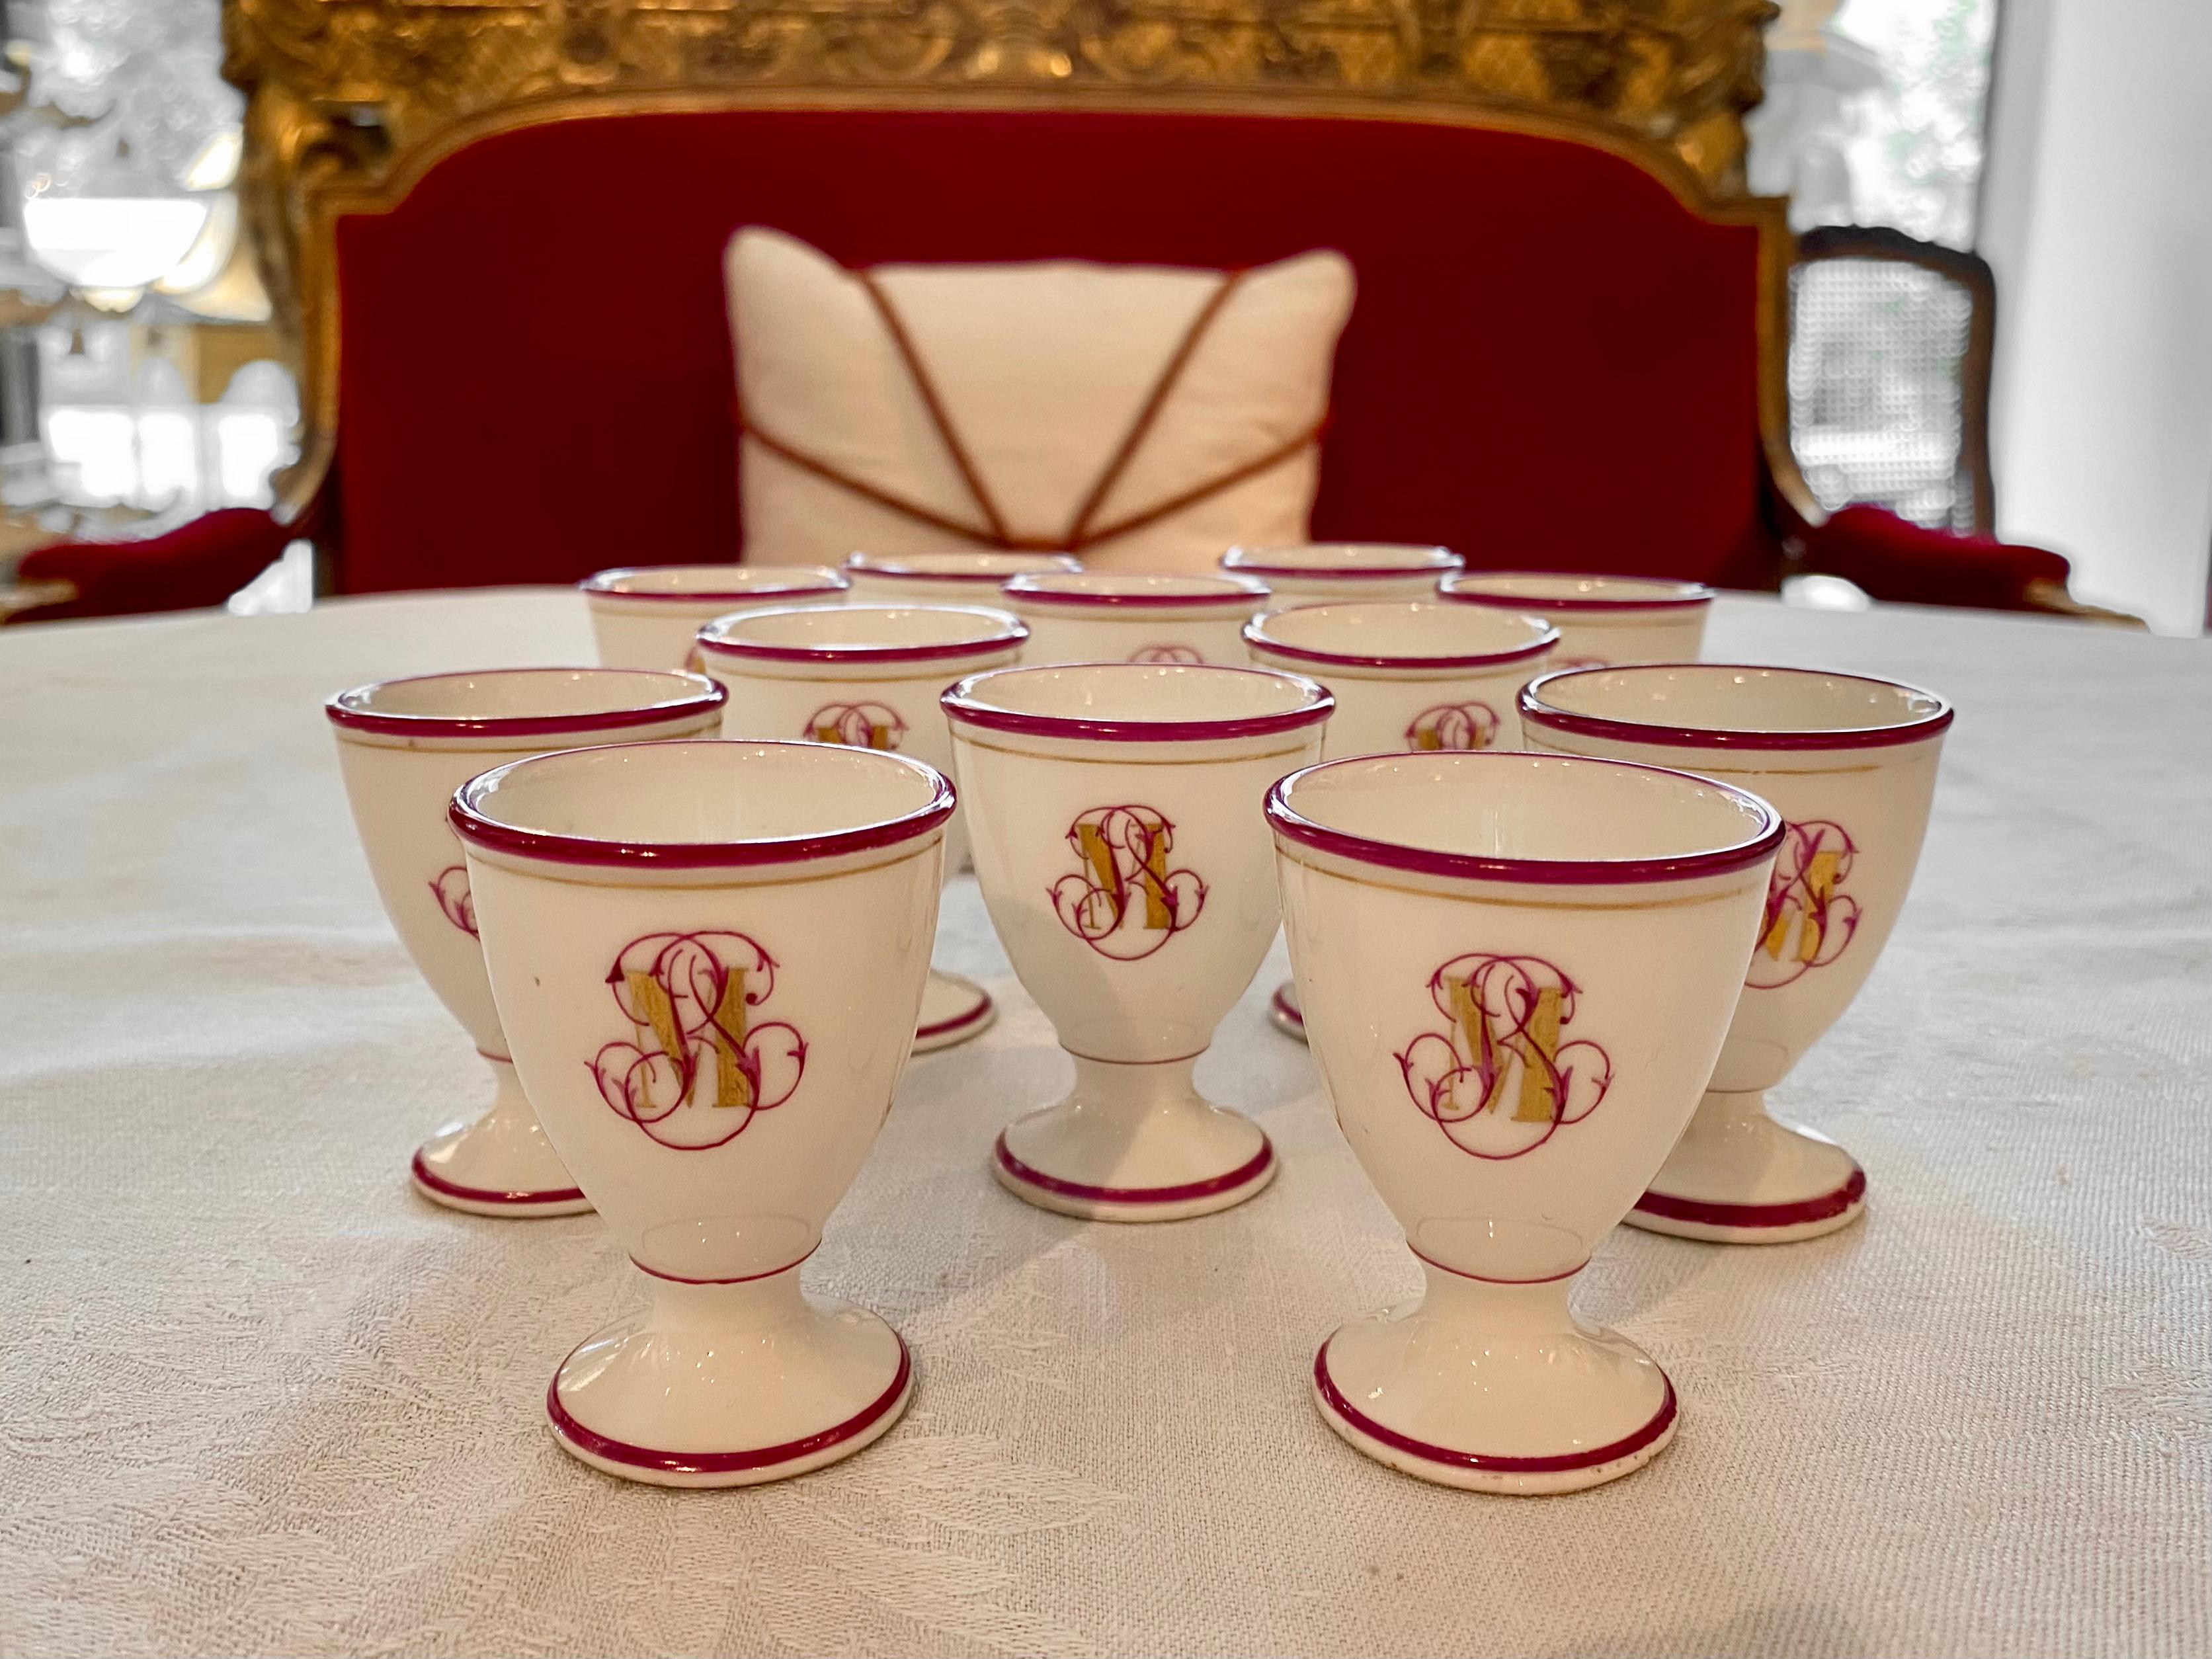 Magnificent French Antique Porcelain 116-Piece Dinner Set, 19th Century For Sale 8